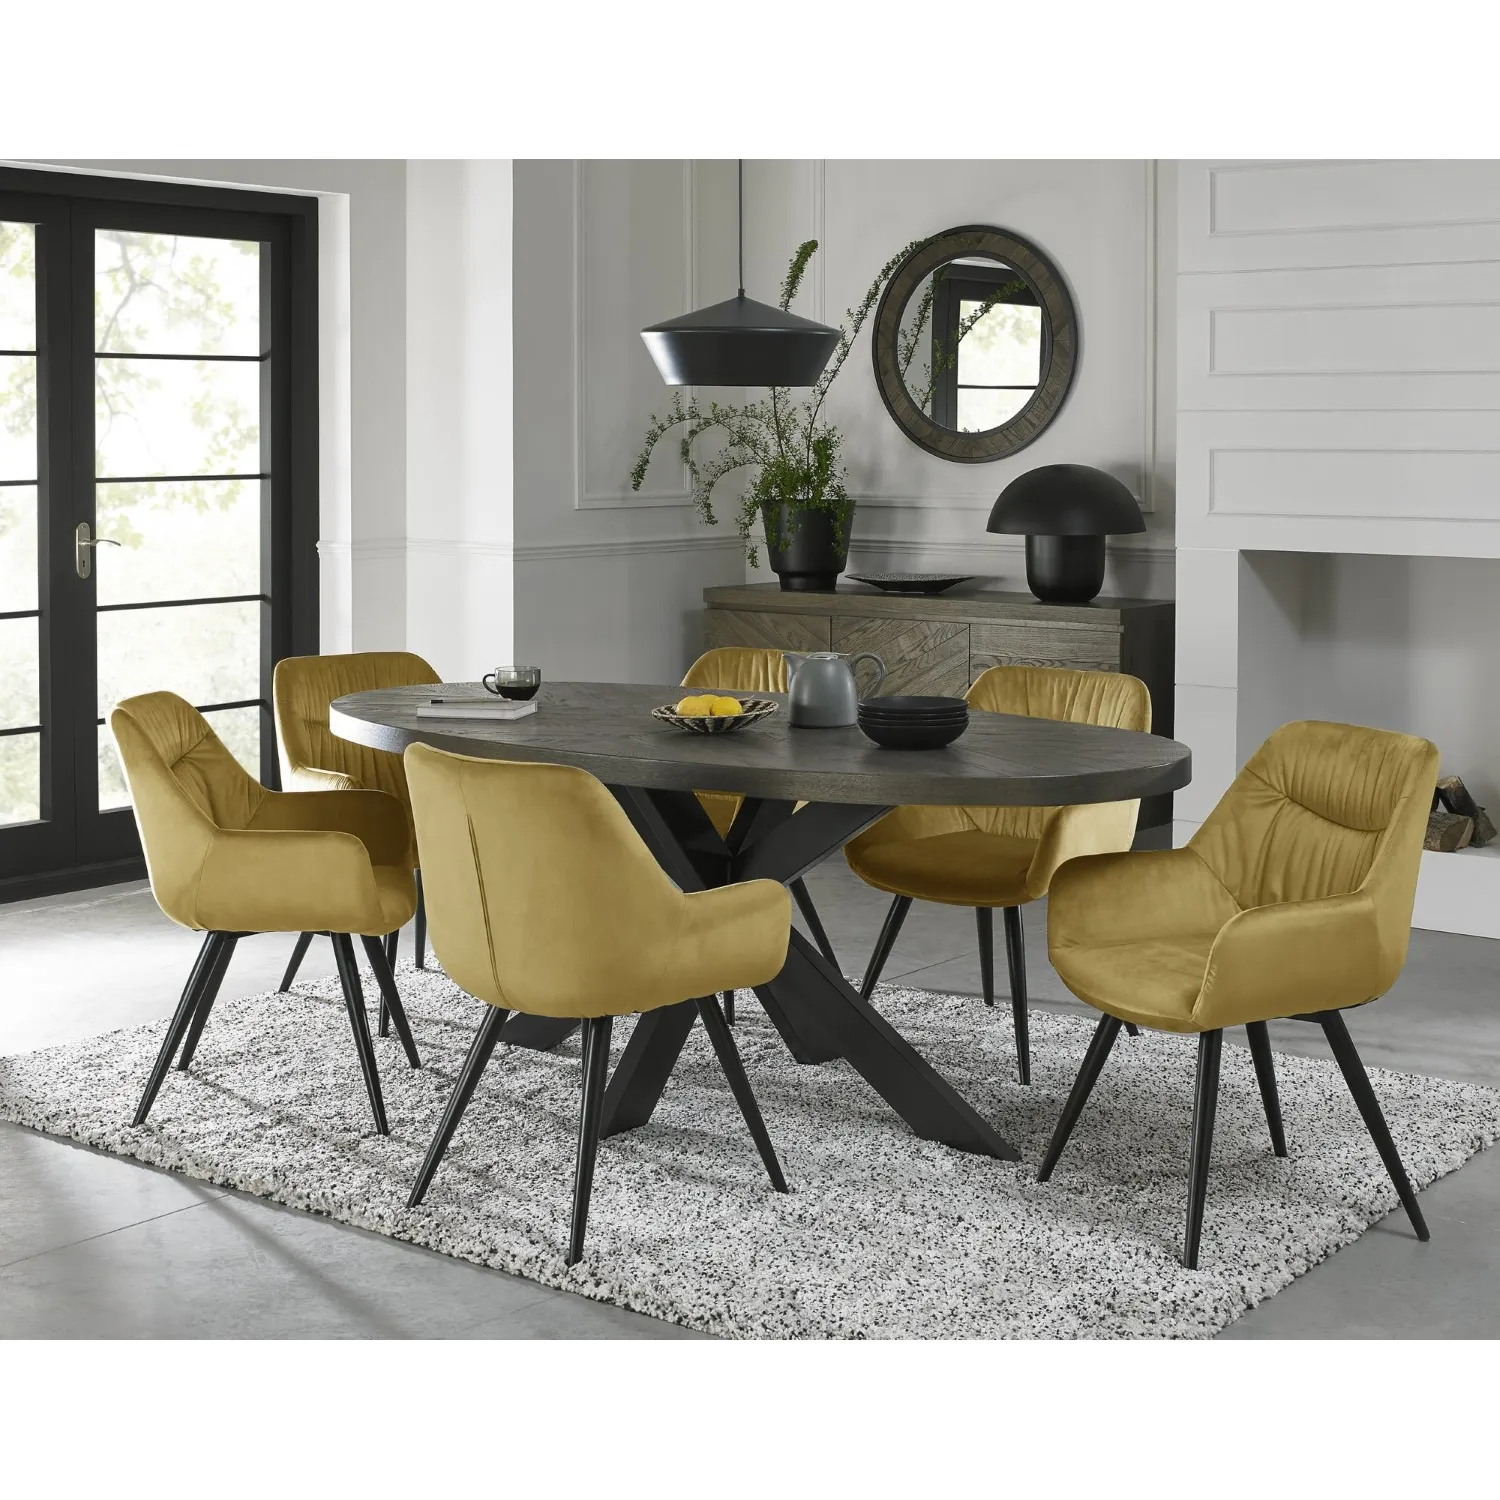 Dark Oak Large Oval Dining Table Set 6 Yellow Velvet Chairs